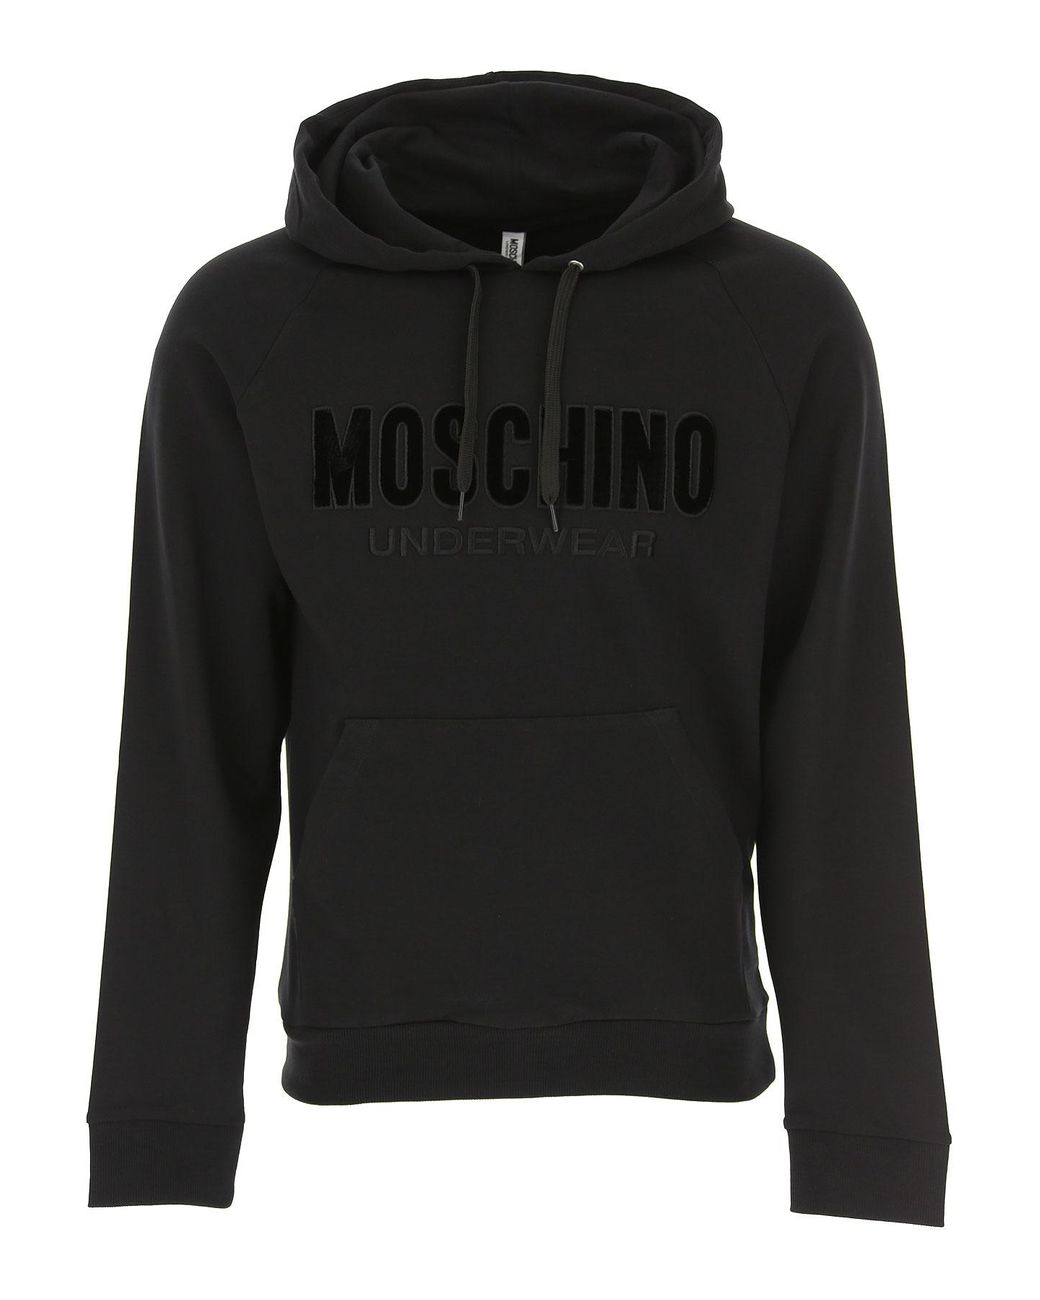 Moschino Cotton Sweatshirt For Men On Sale in Black for Men - Lyst